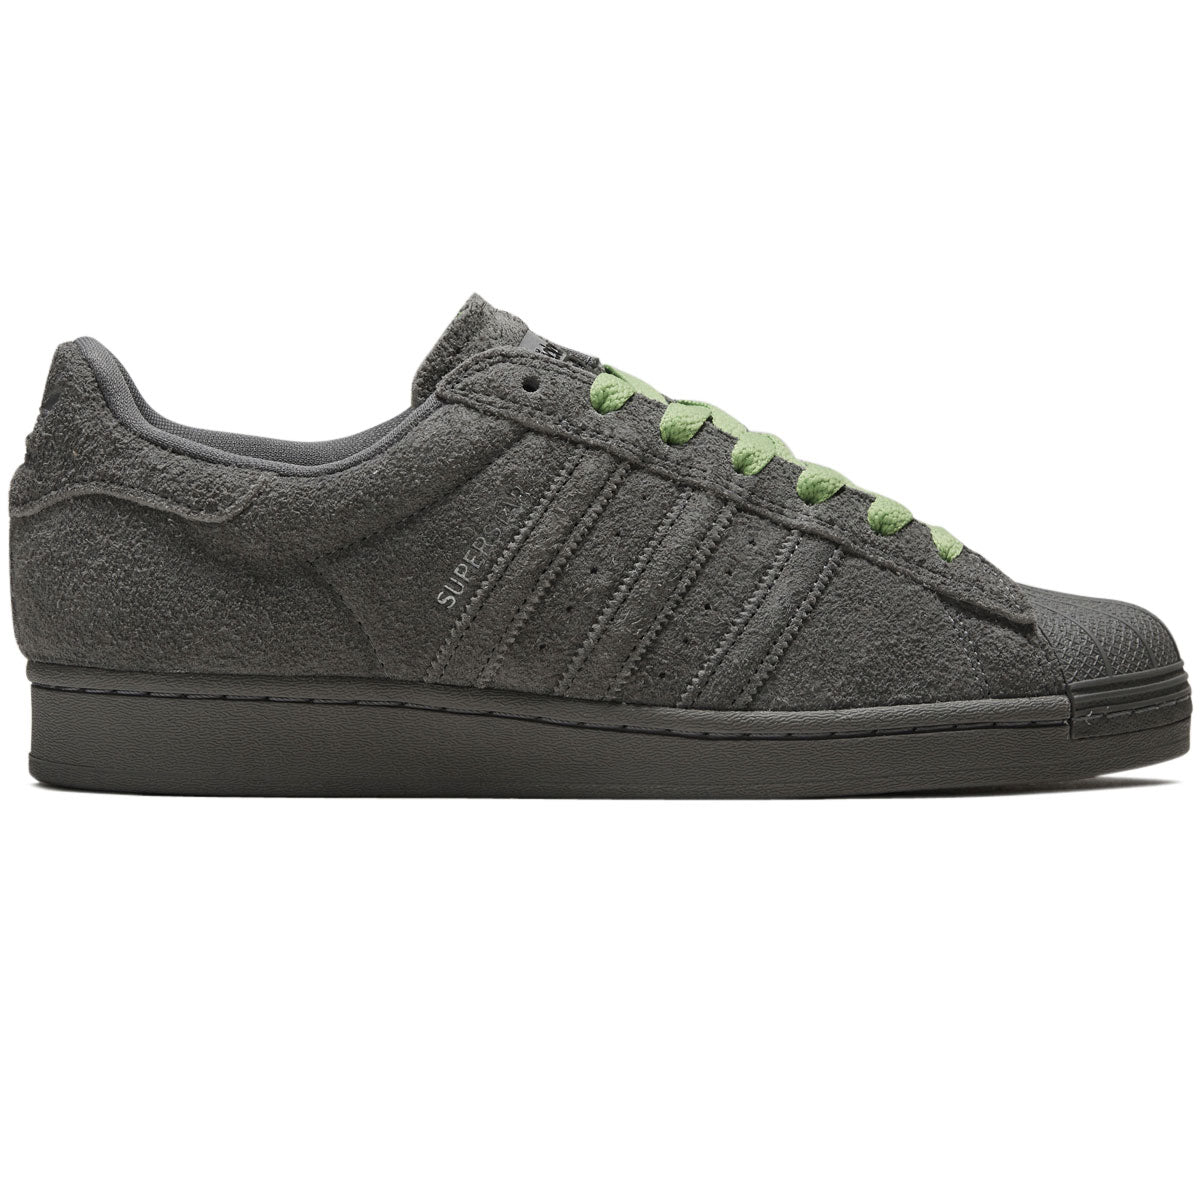 Adidas Superstar ADV Shoes - Grey/Grey/Core Black image 1